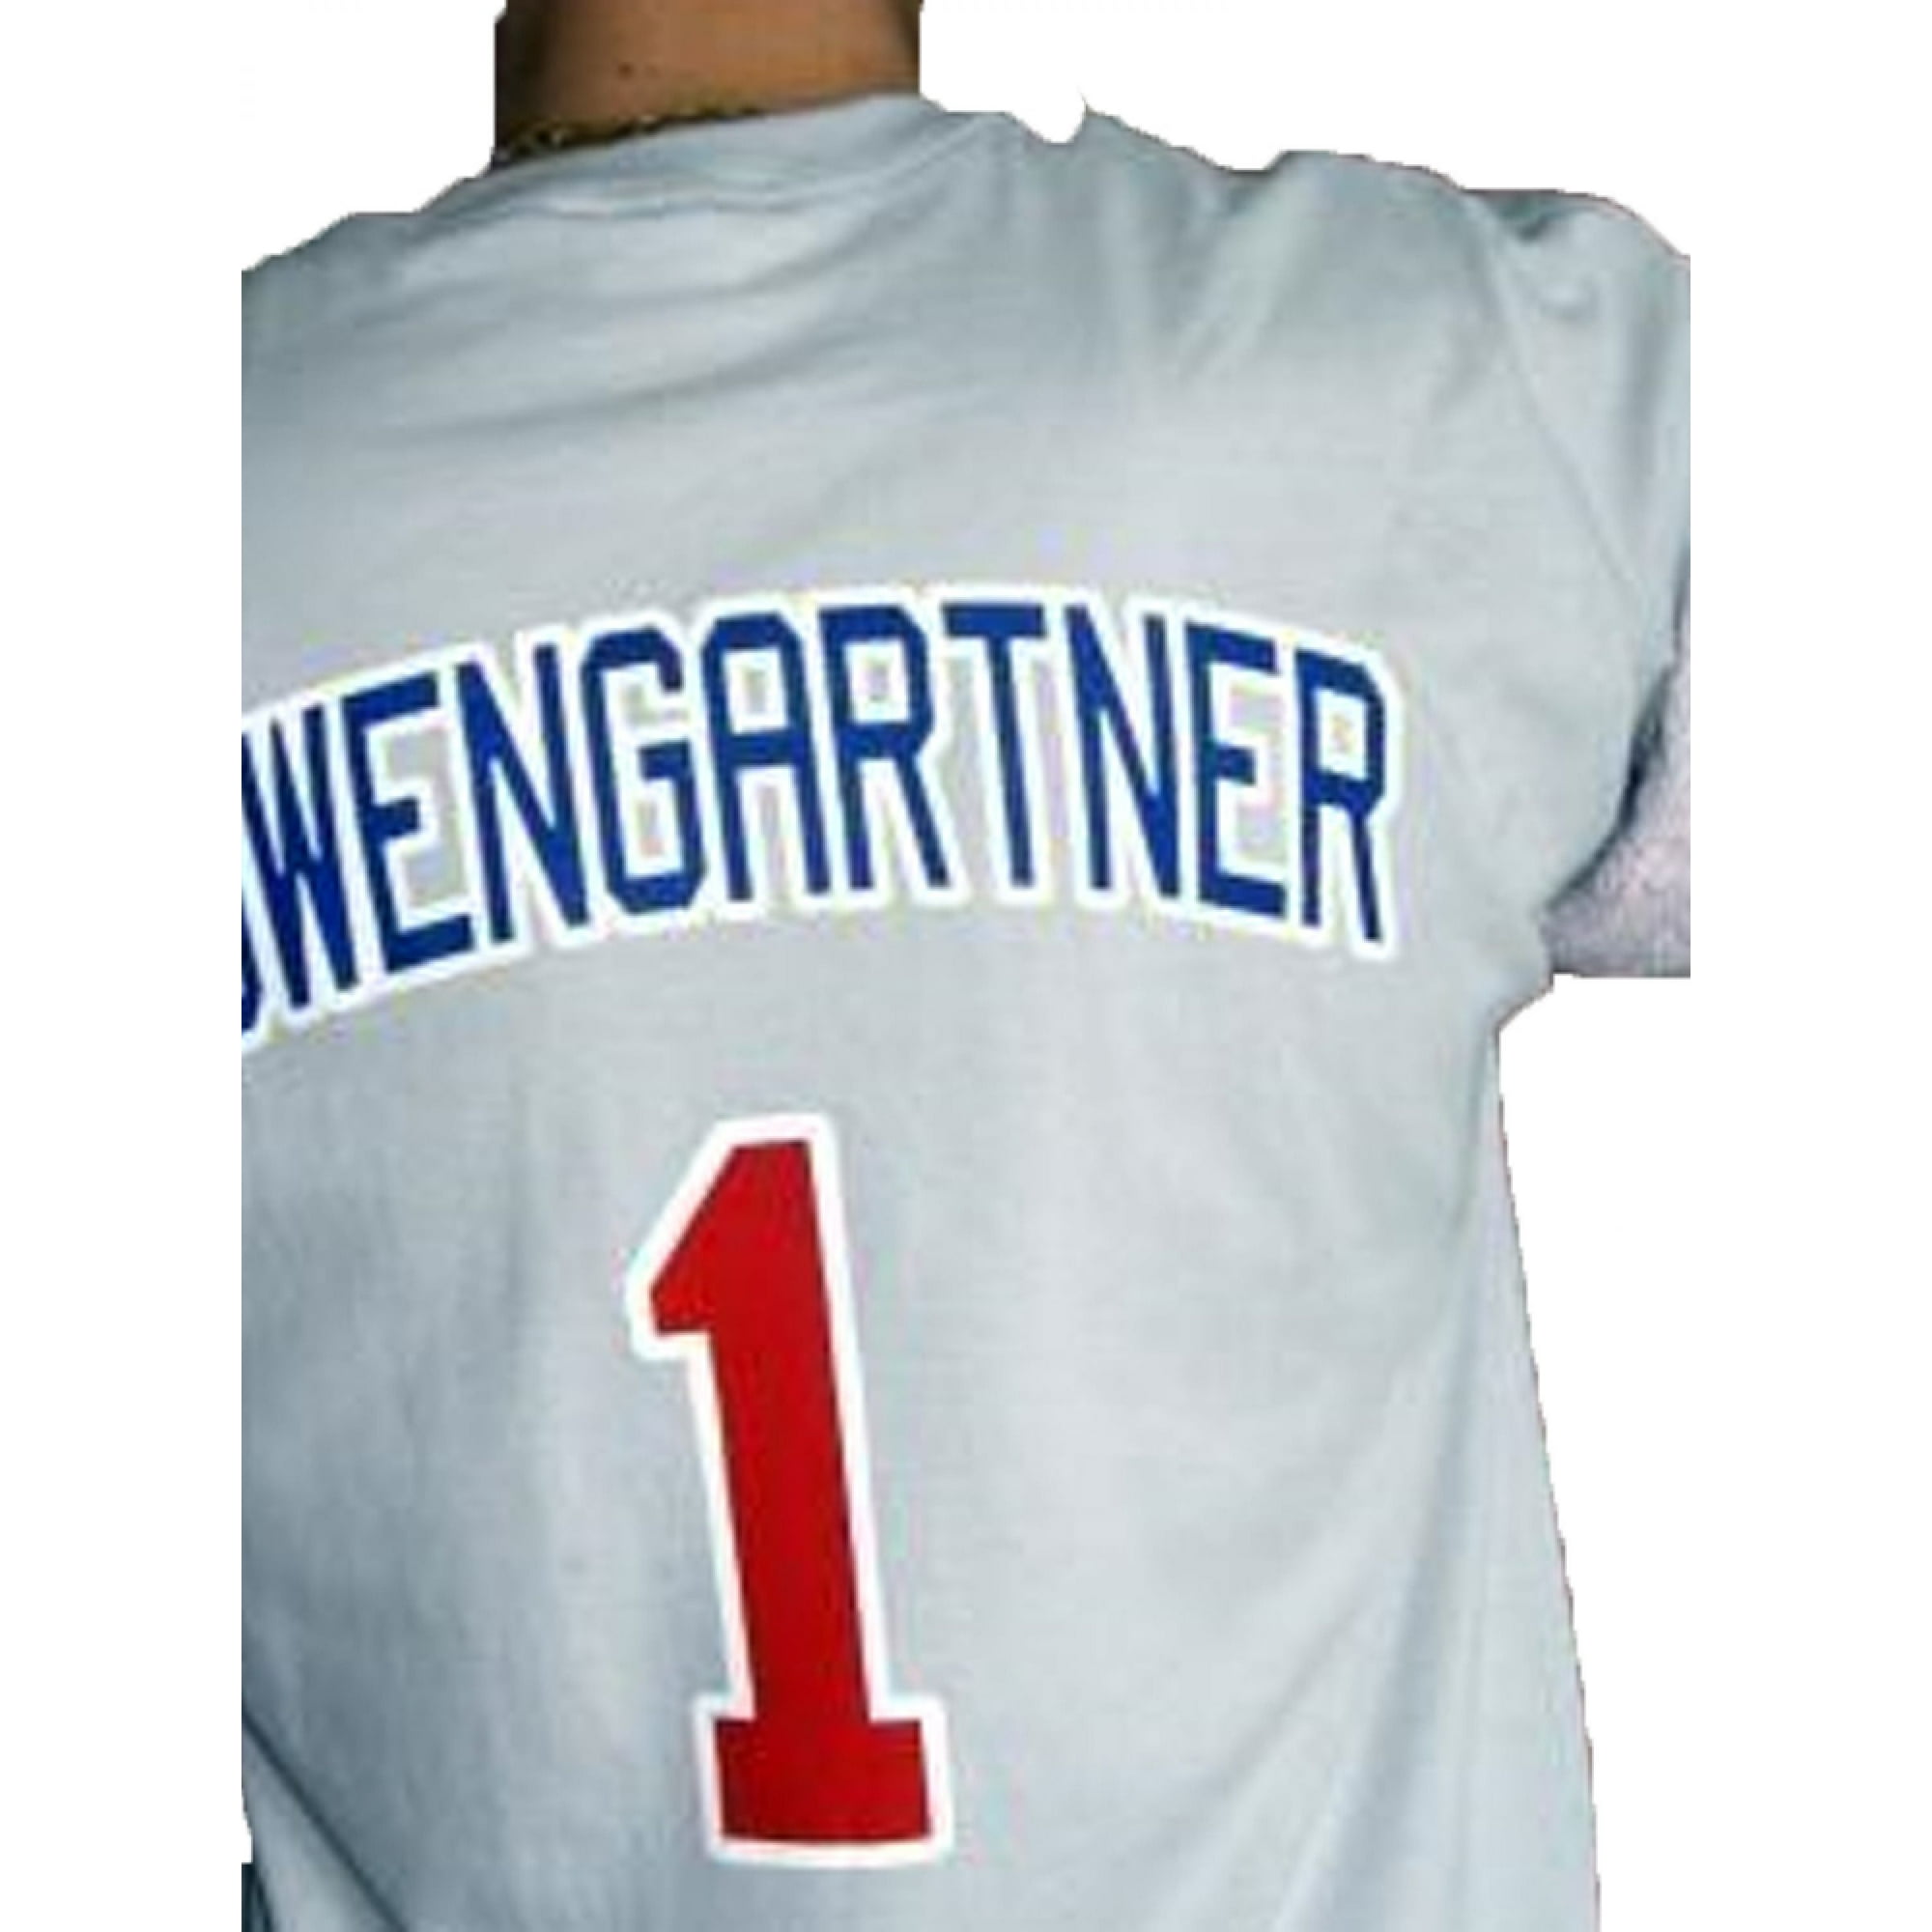 rowengartner jersey